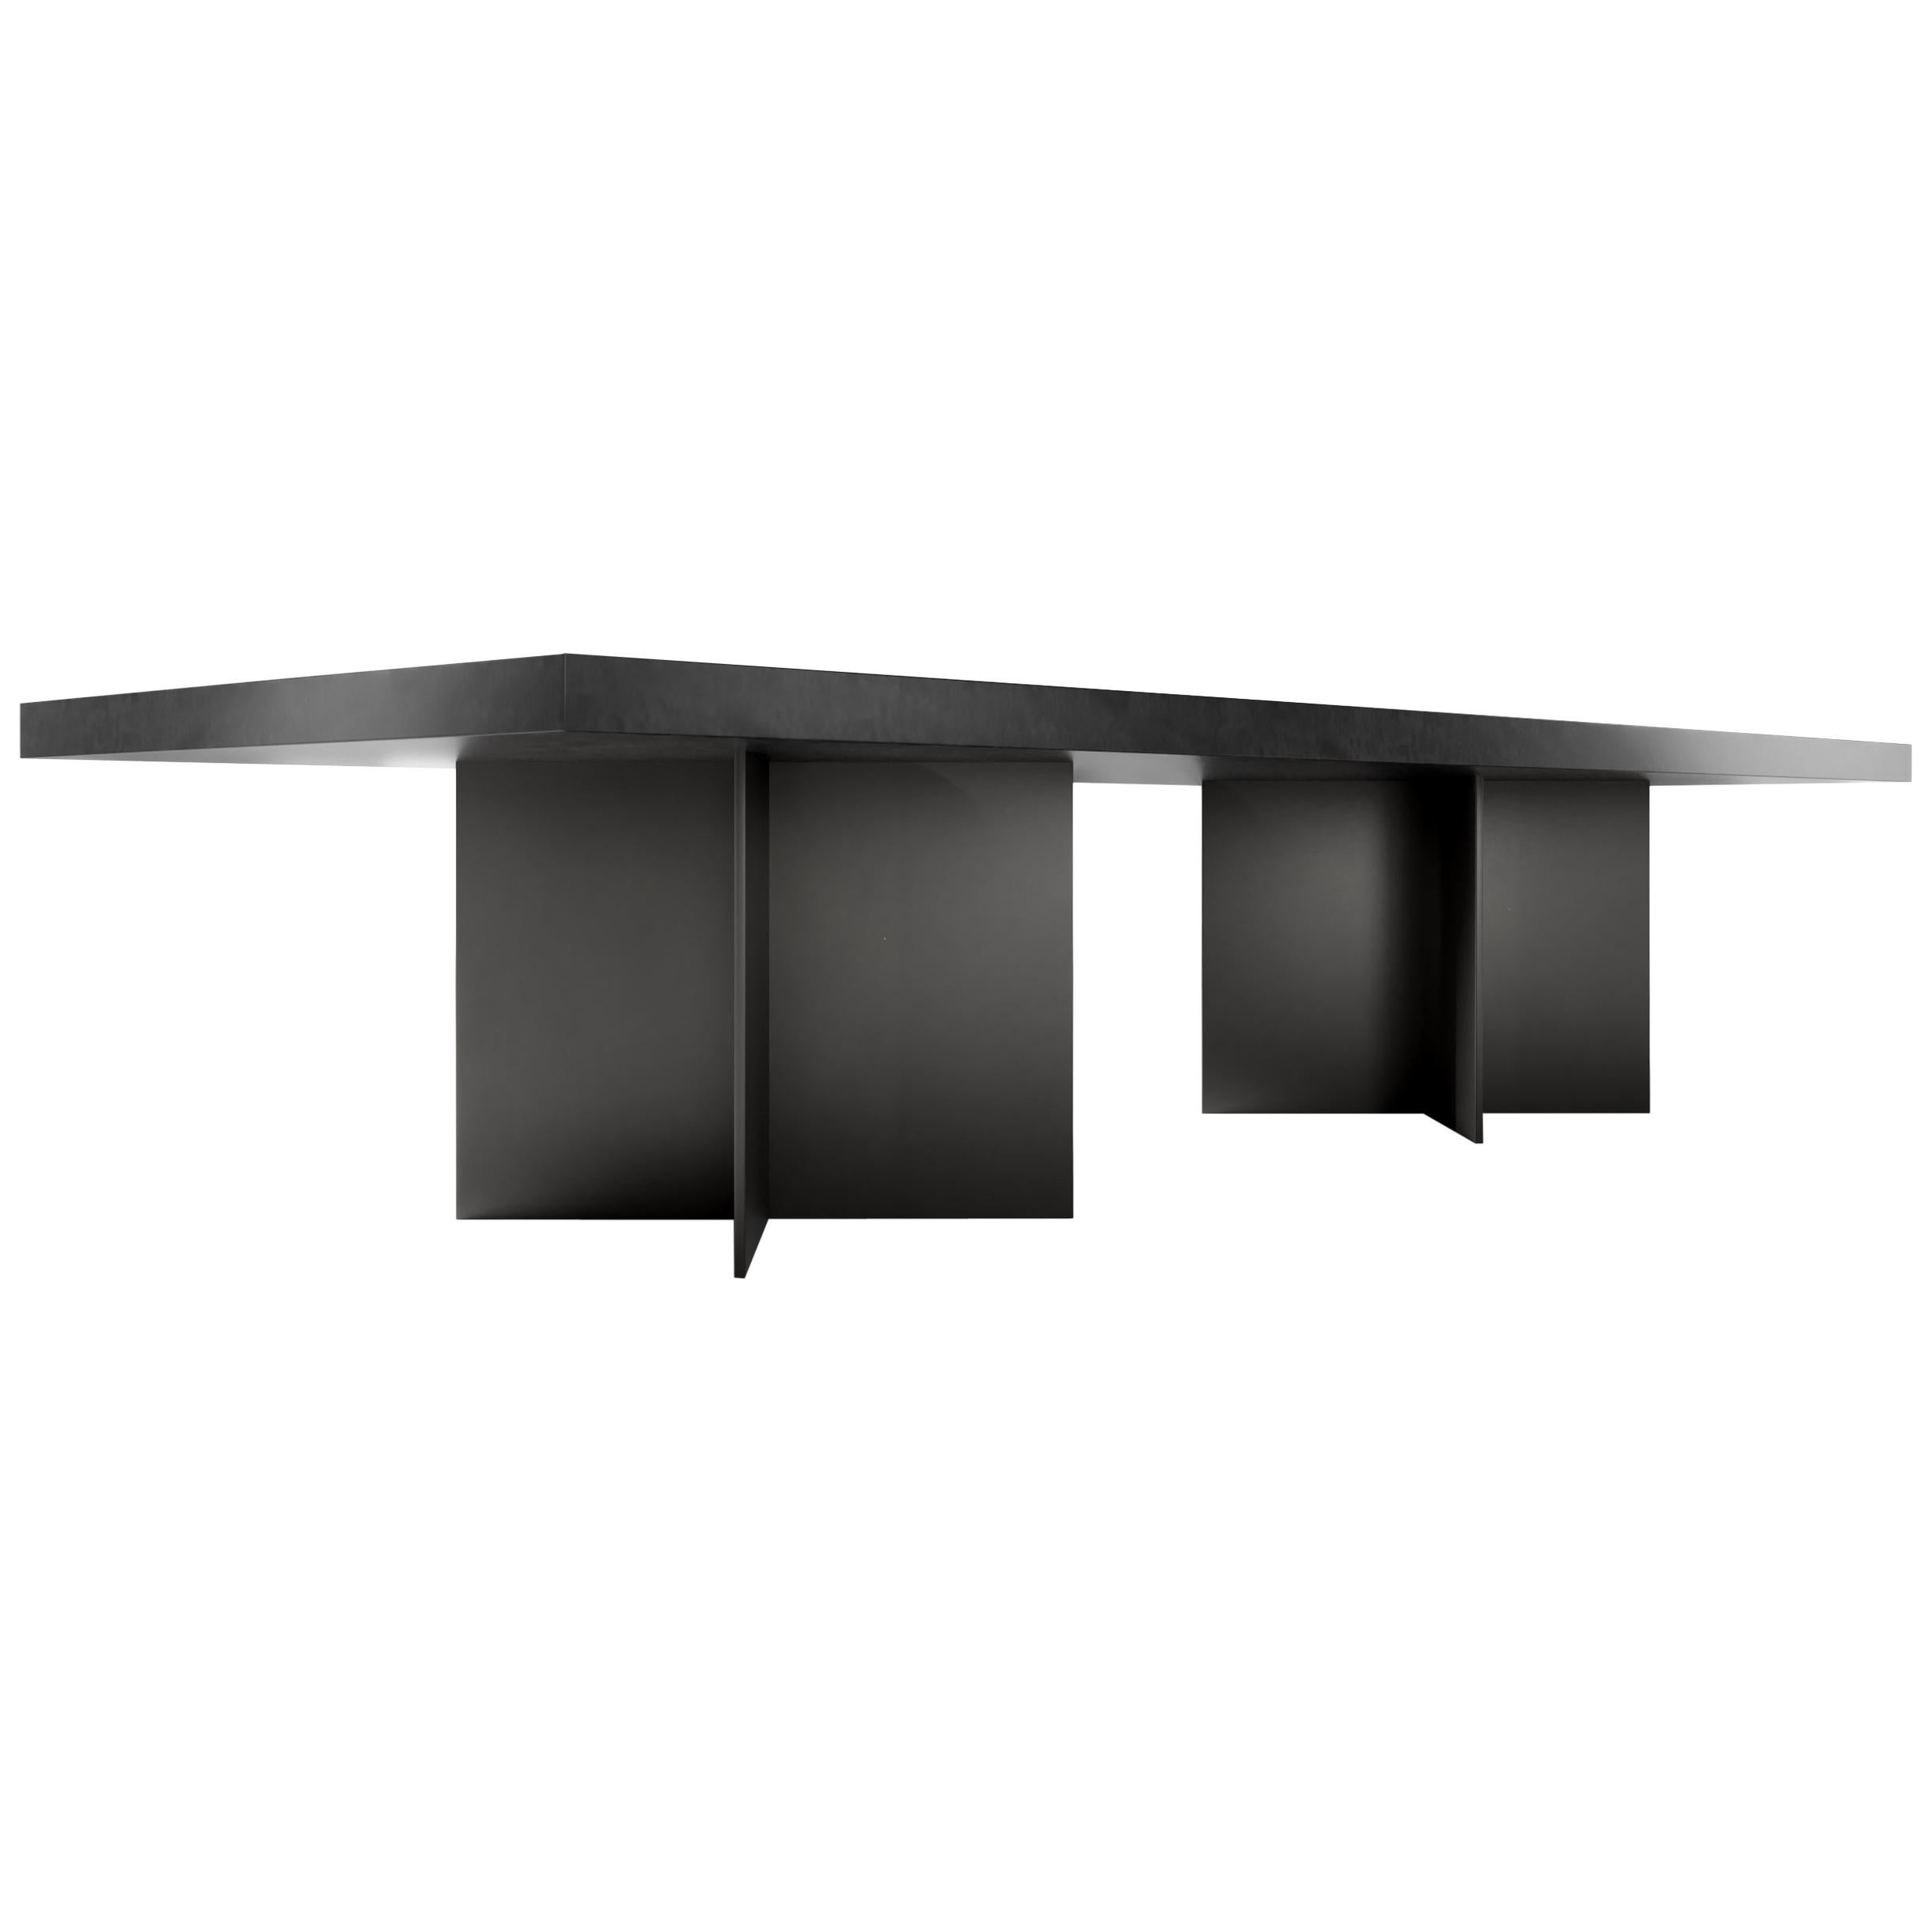 ZUMA DINING TABLE - Modern Design in High Gloss Wood Top and Metallic Base